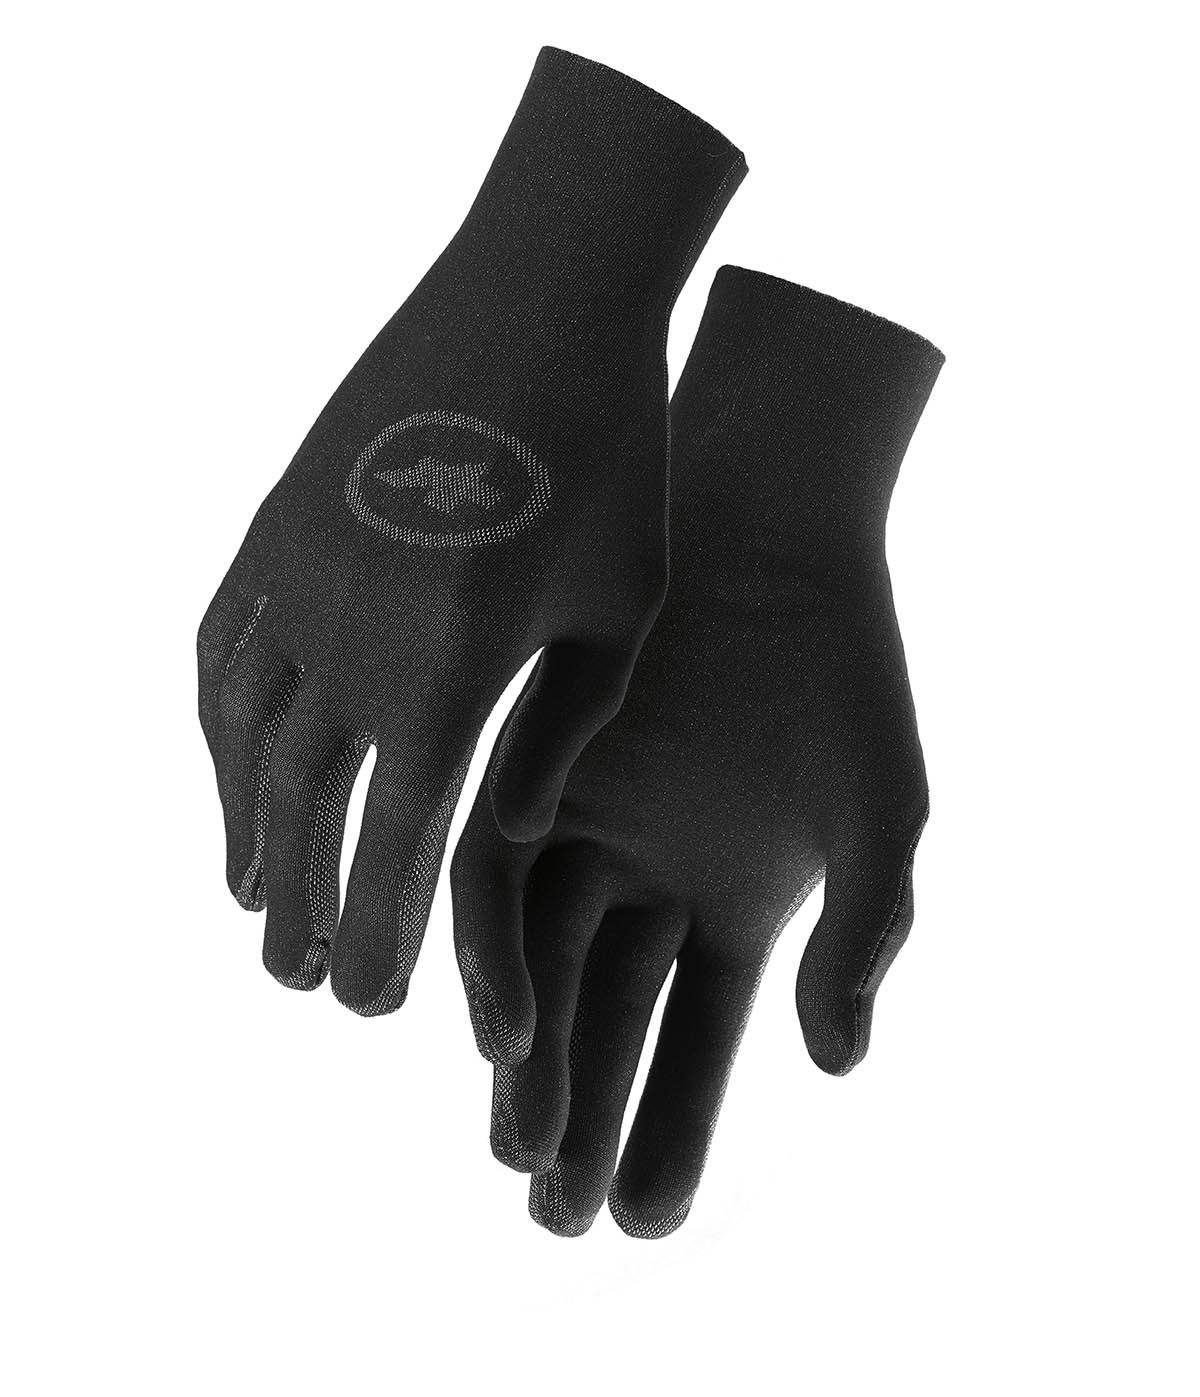 Assos Assosoires Spring Fall Liner Gloves - Blackseries